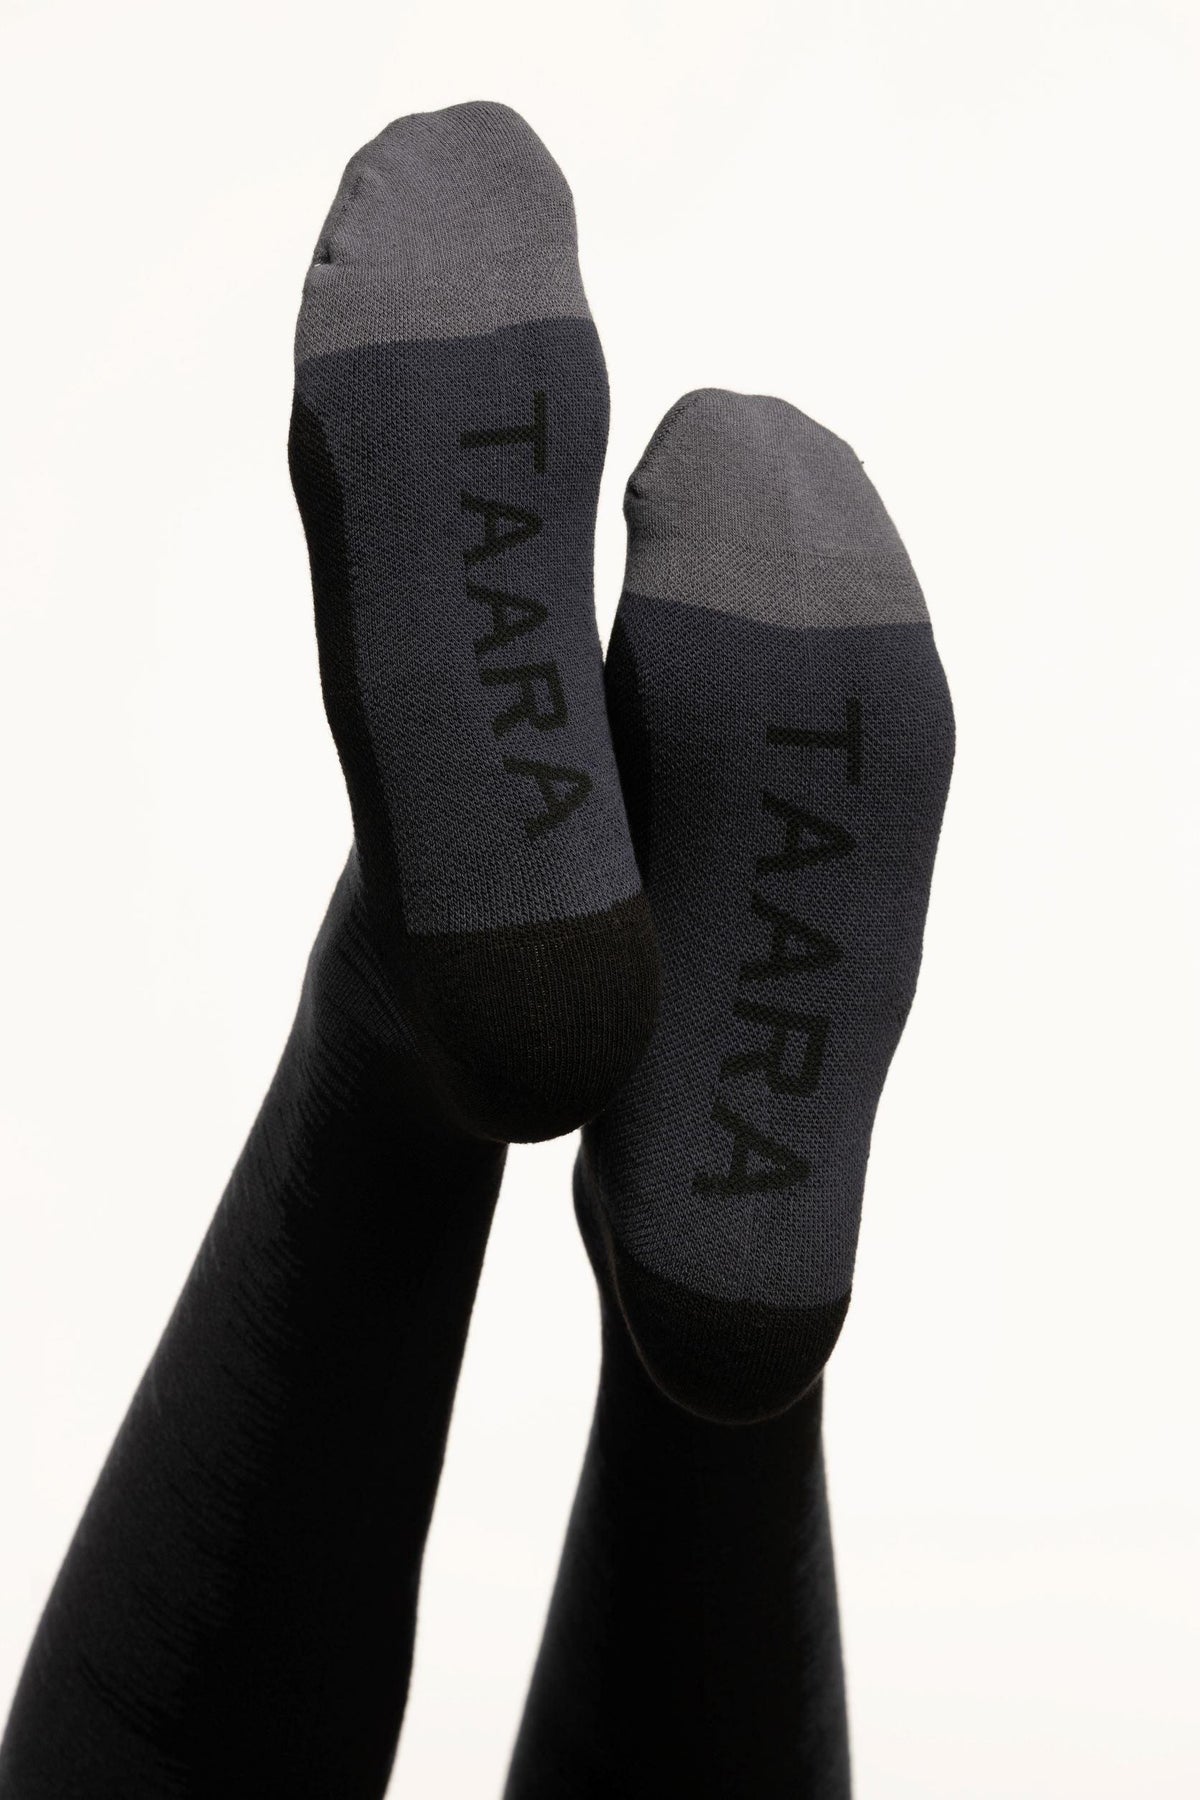 ASTRA Graduated Compression Sock - TAARA